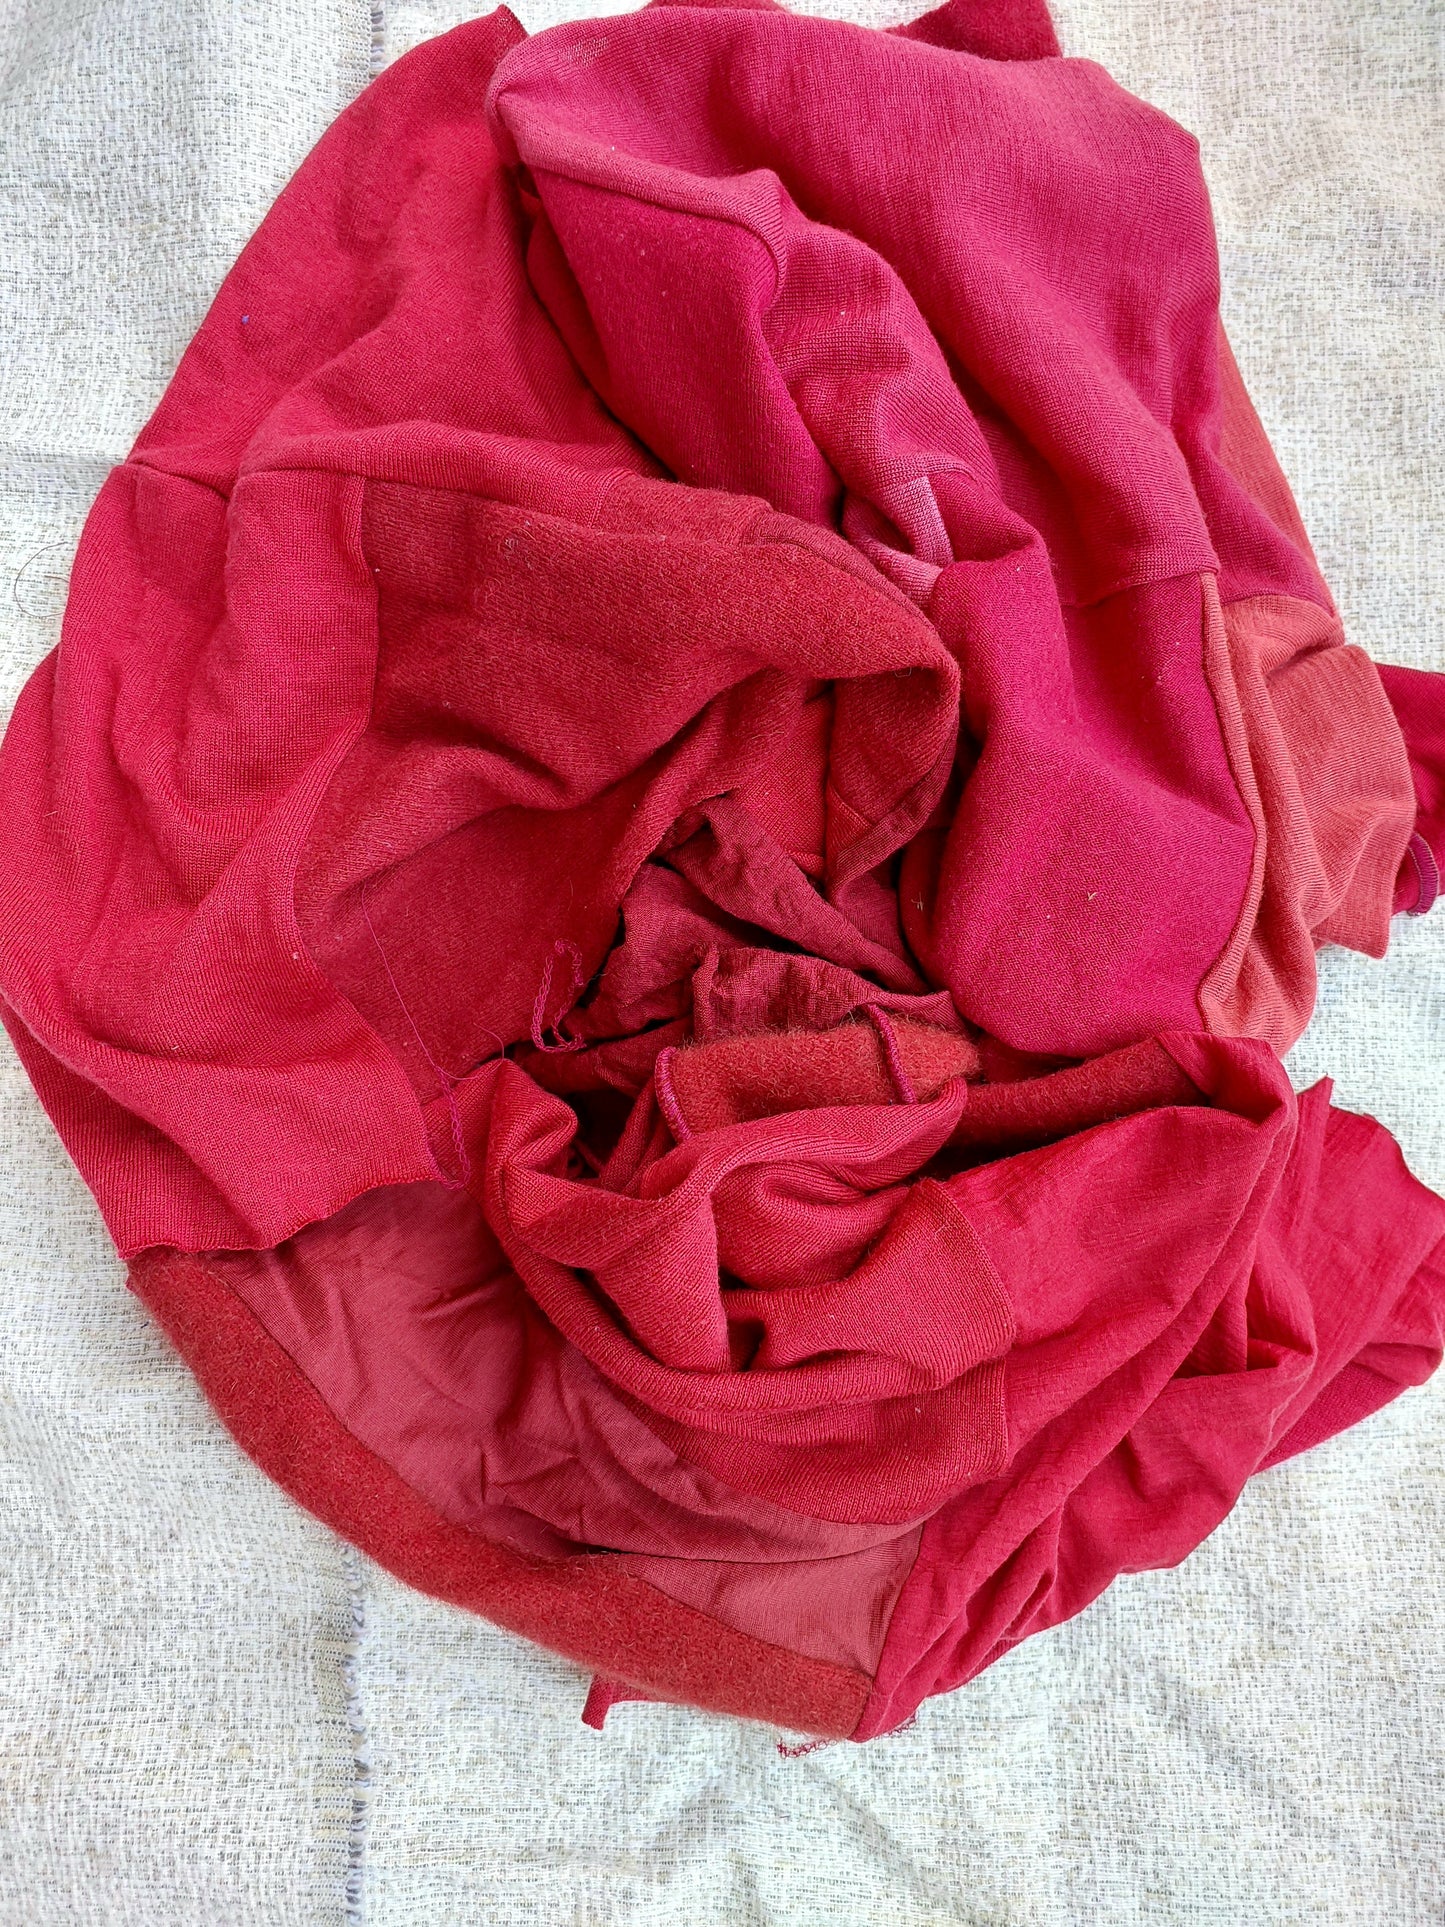 Unisex Merino Sweater- Earthy reds